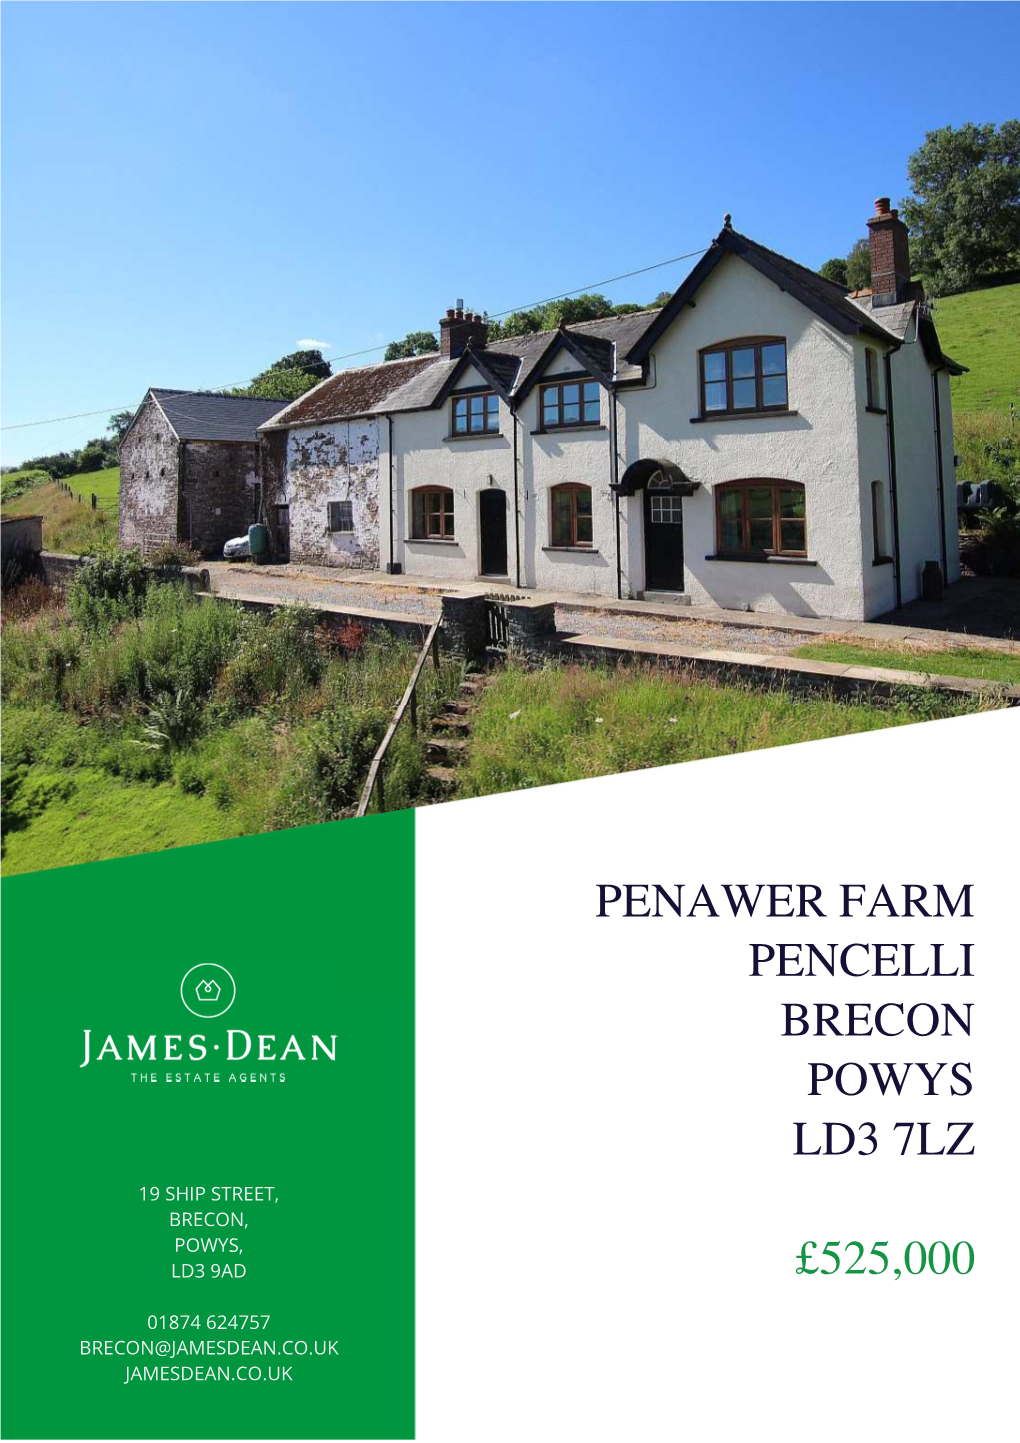 Penawer Farm Pencelli Brecon Powys Ld3 7Lz £525,000